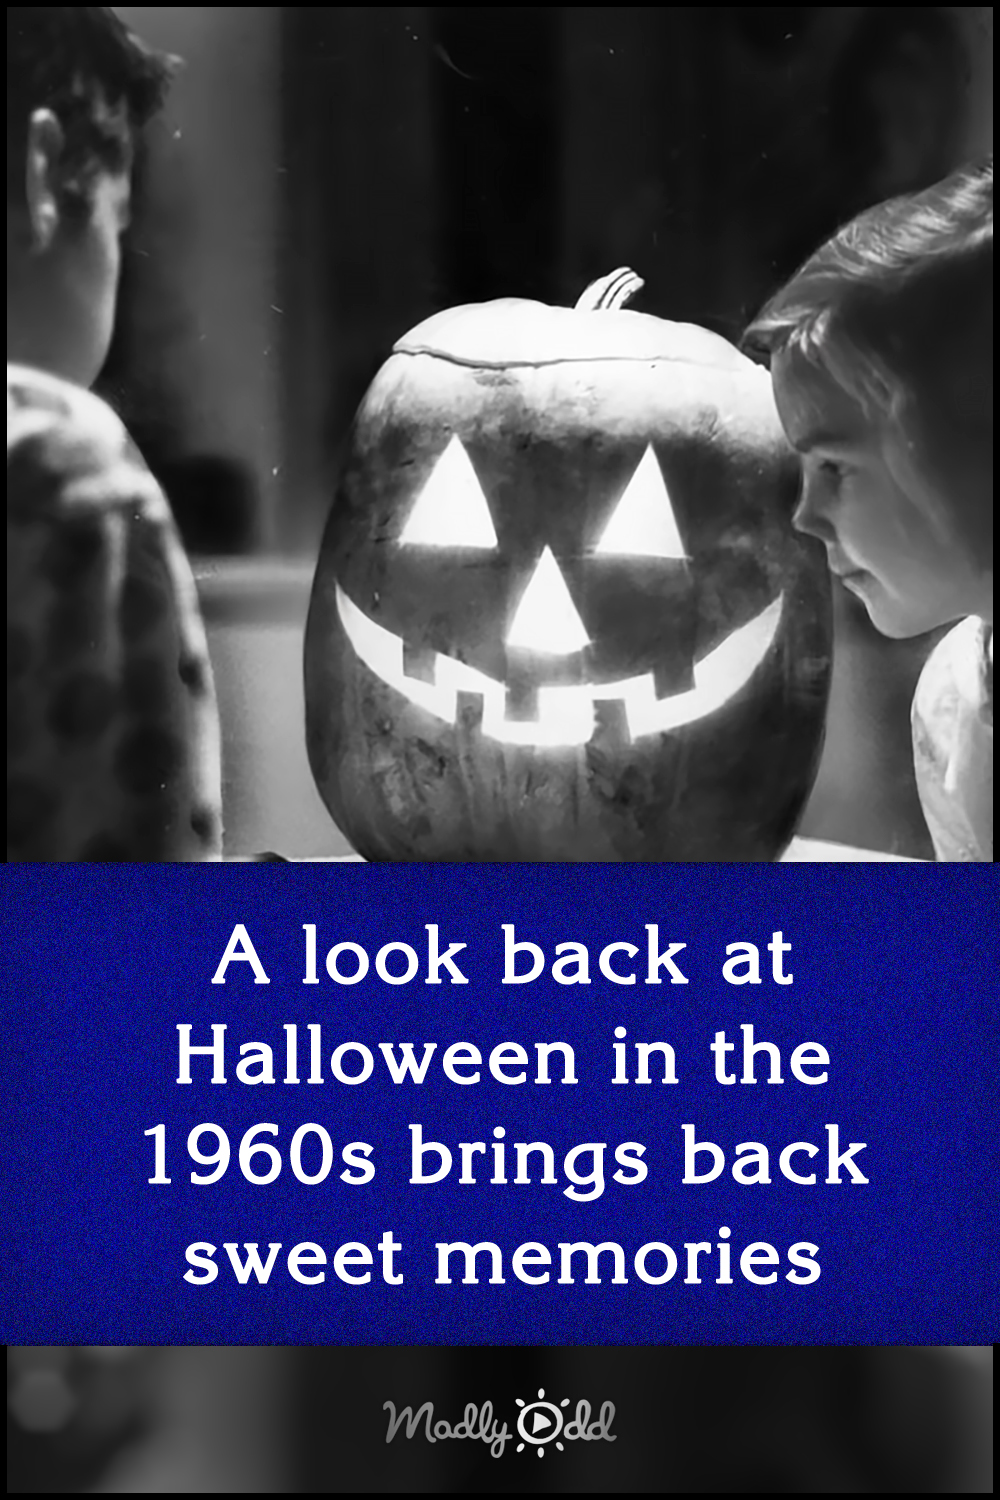 A look back at Halloween in the 1960s brings back sweet memories